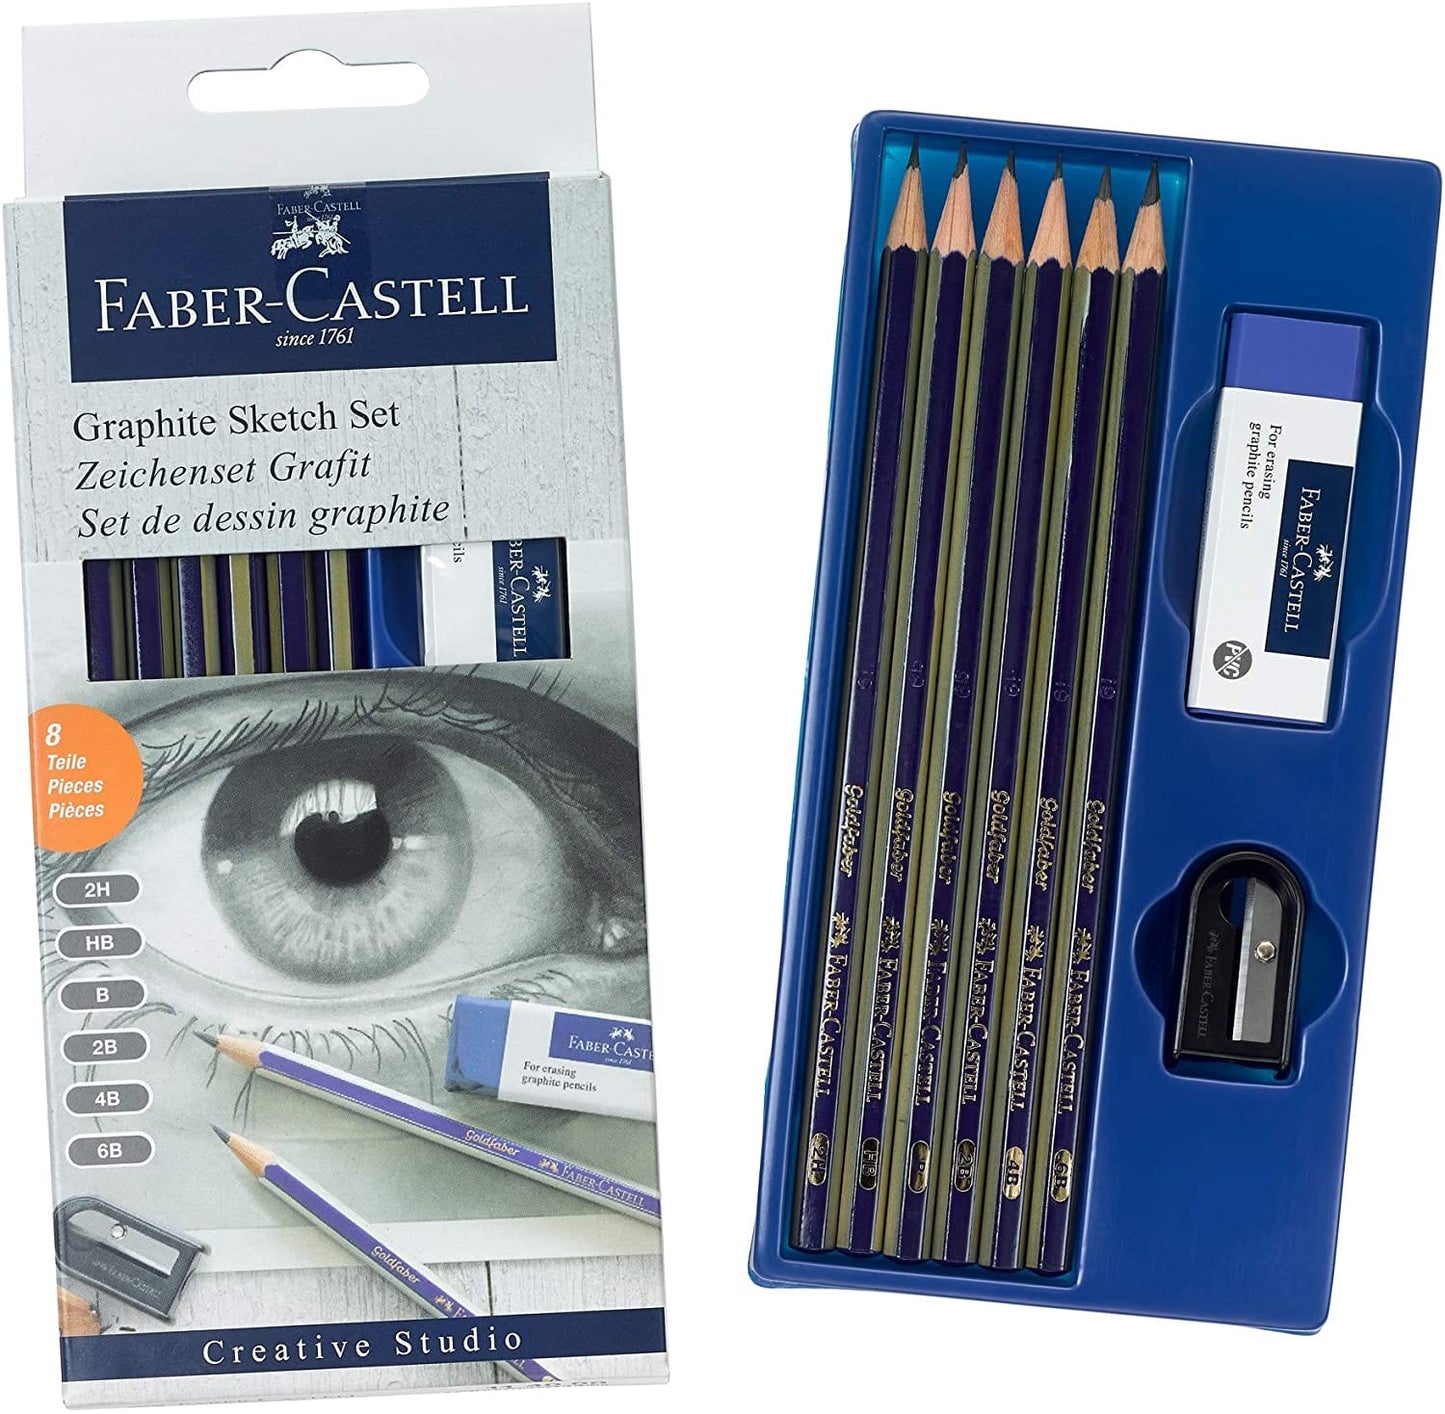 FABER CASTELL Graphite Pencil Set Faber-Castell - Goldfaber - Graphite Sketch Set - 8 Pieces - Item #114000